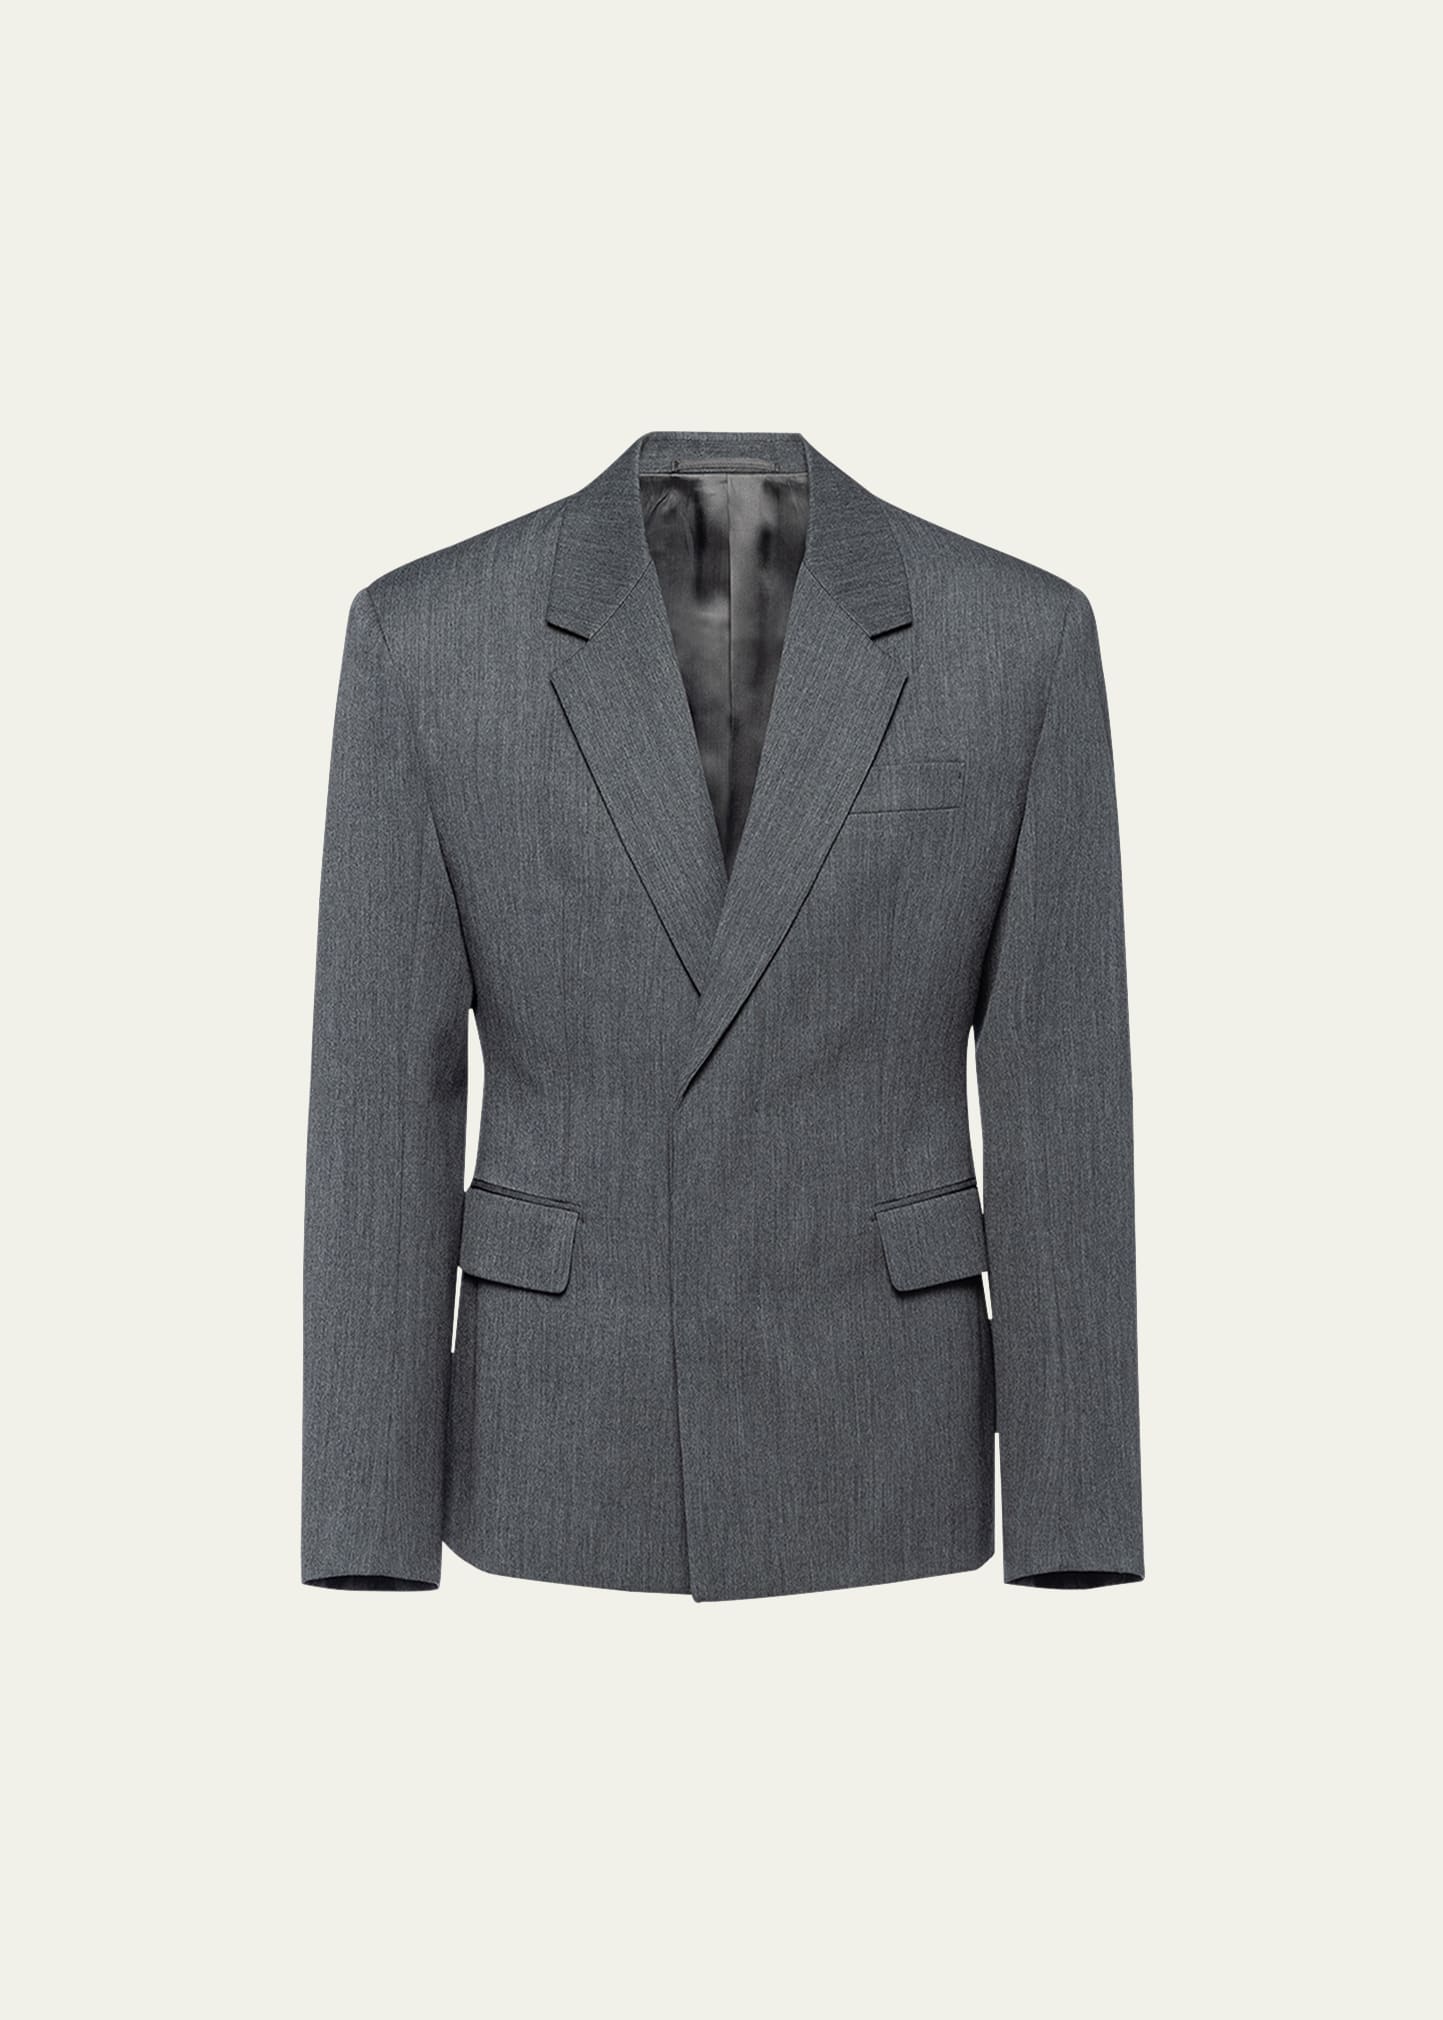 Prada Men's Tailored Gabardine Sport Jacket In Ardesia